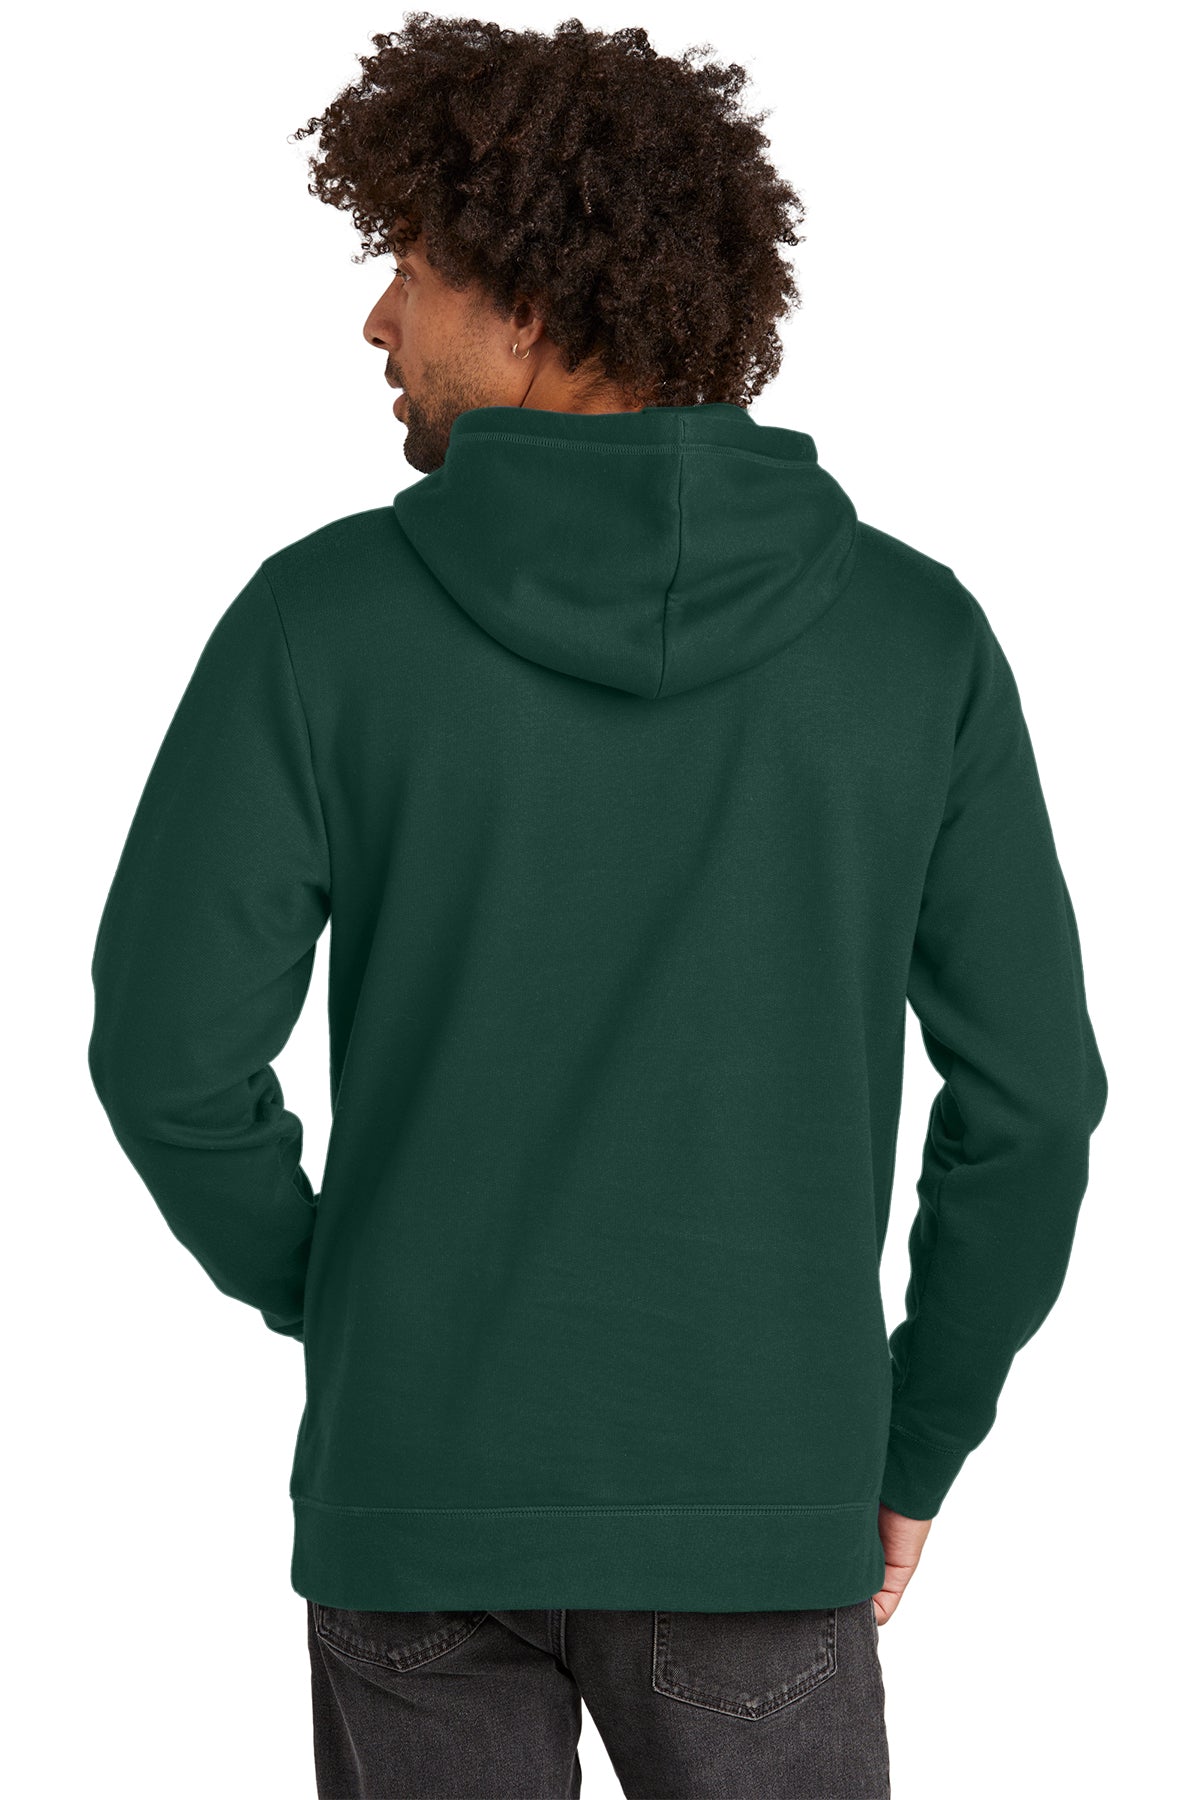 New Era Comeback Fleece Customized Hoodies, Dark Green